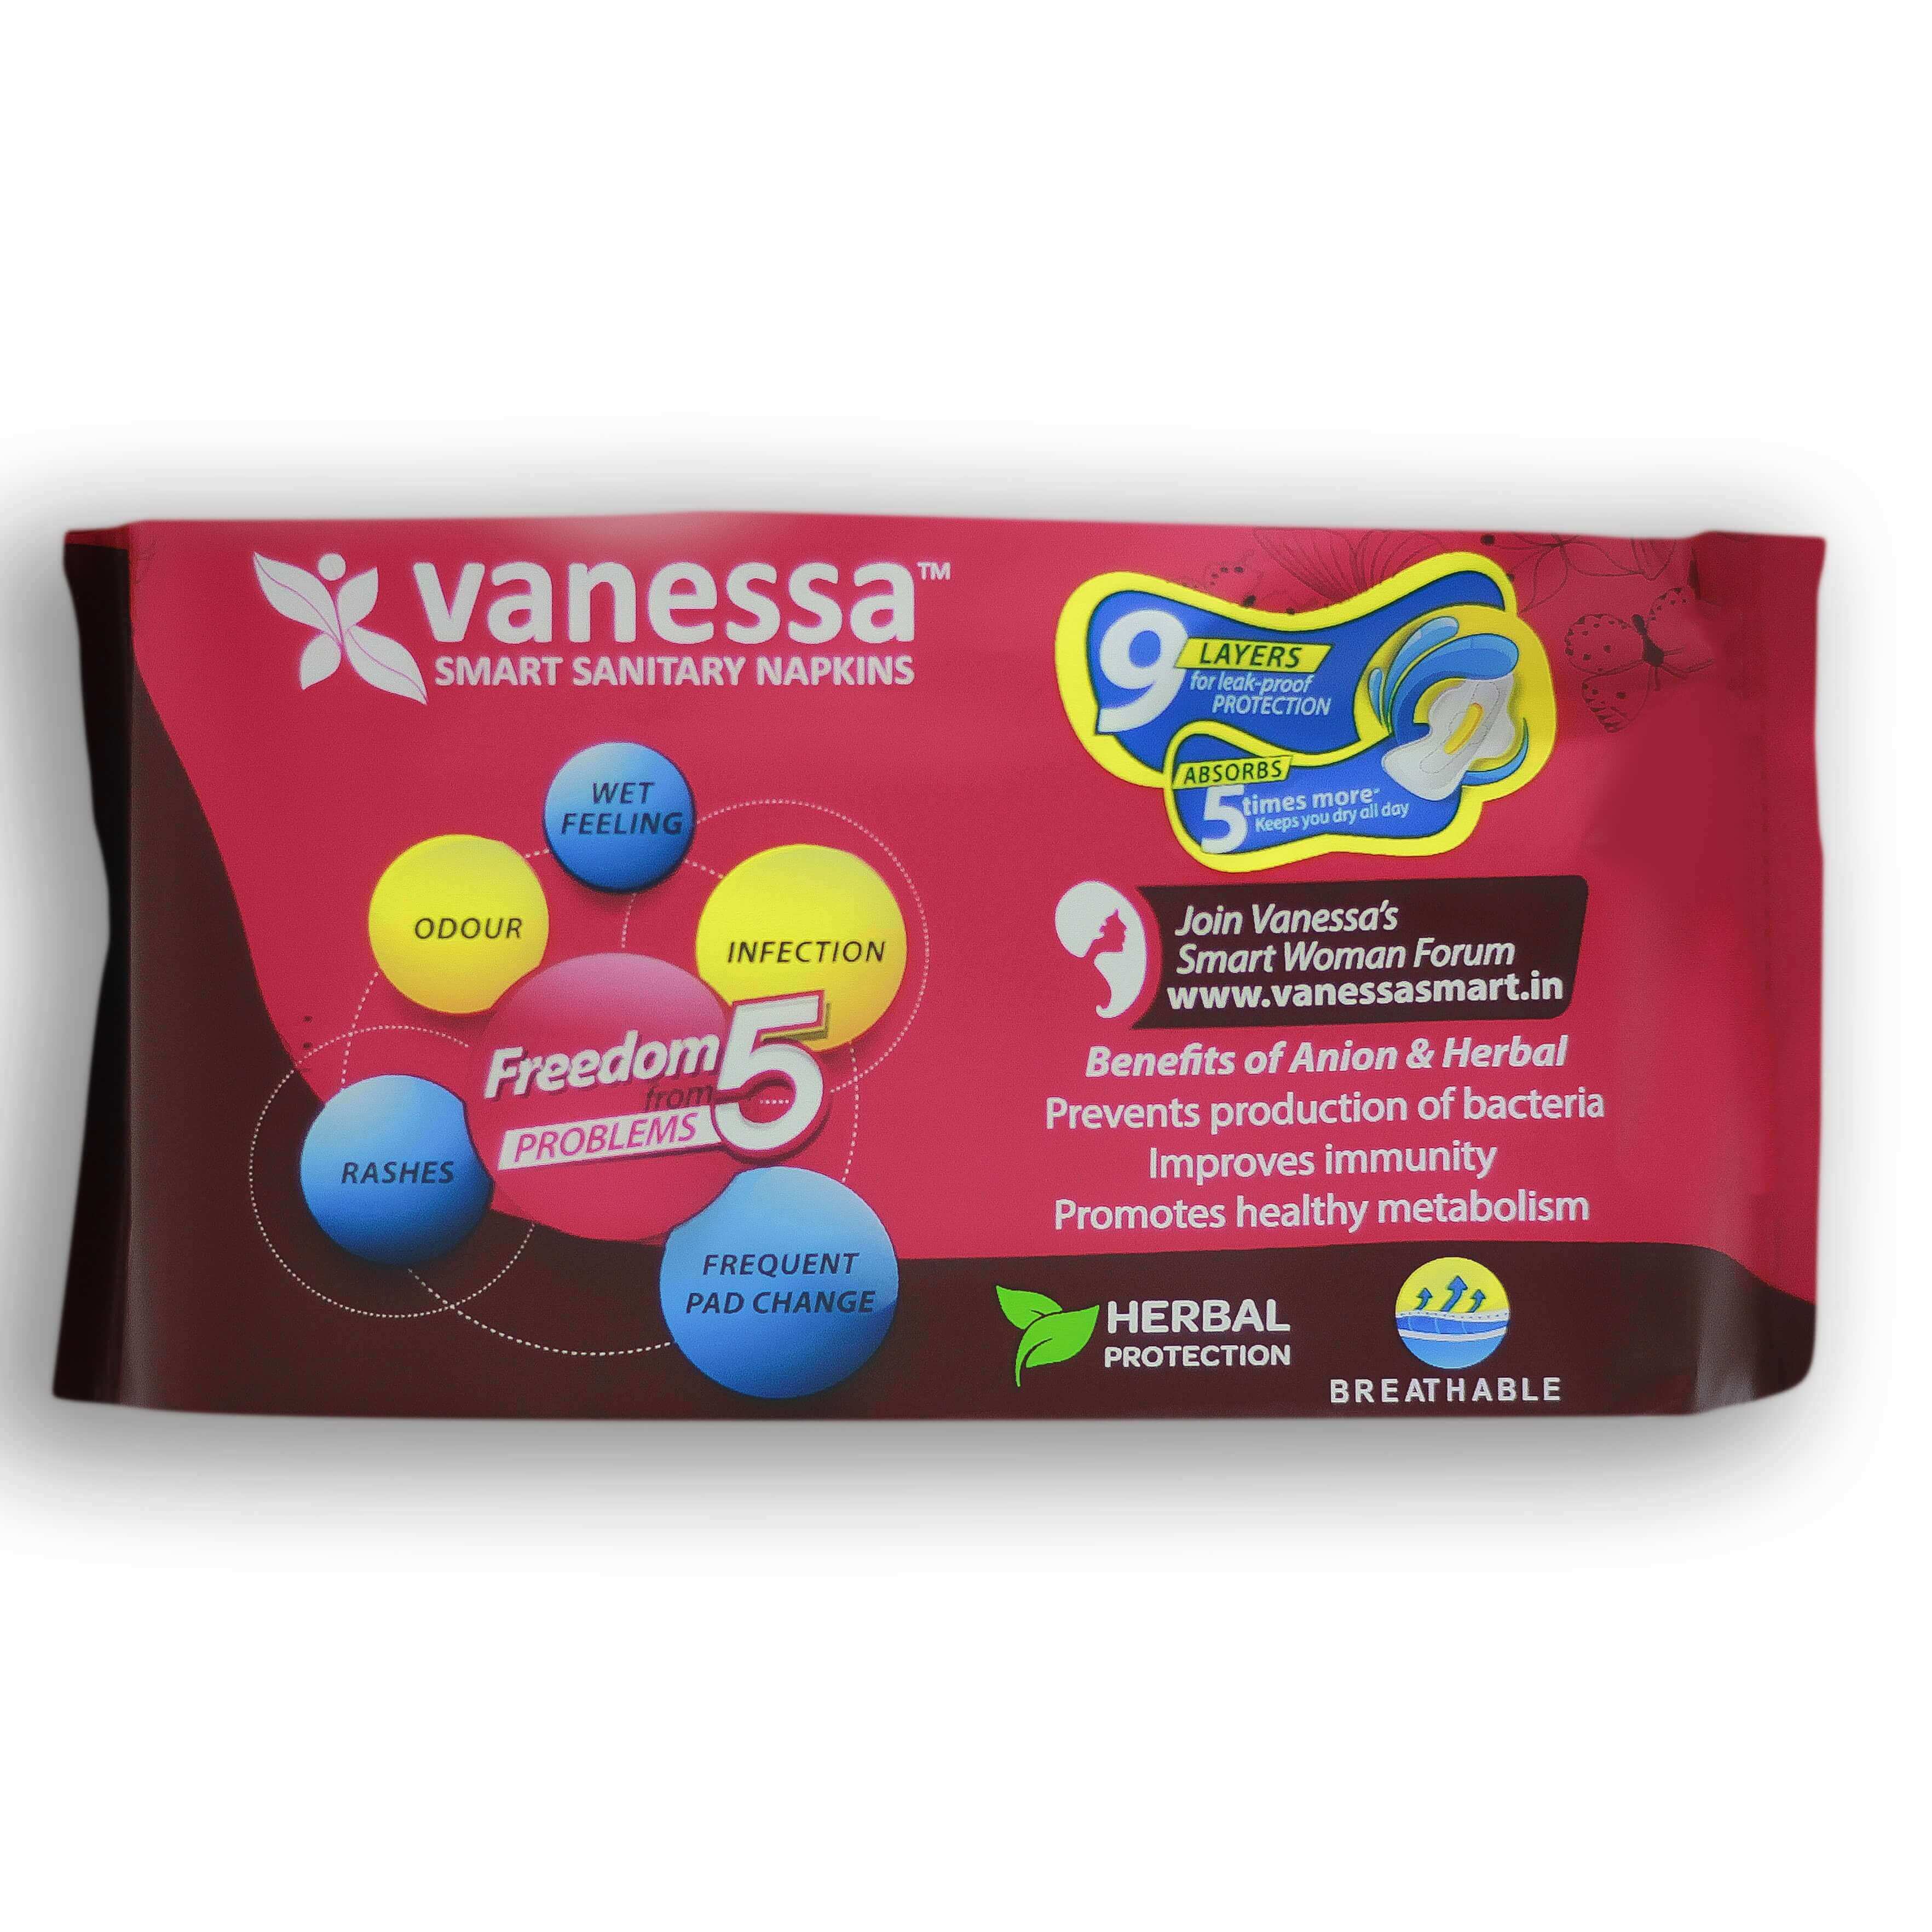 Vanessa sanitary napkins ultralong size-xxl(338mm) -7